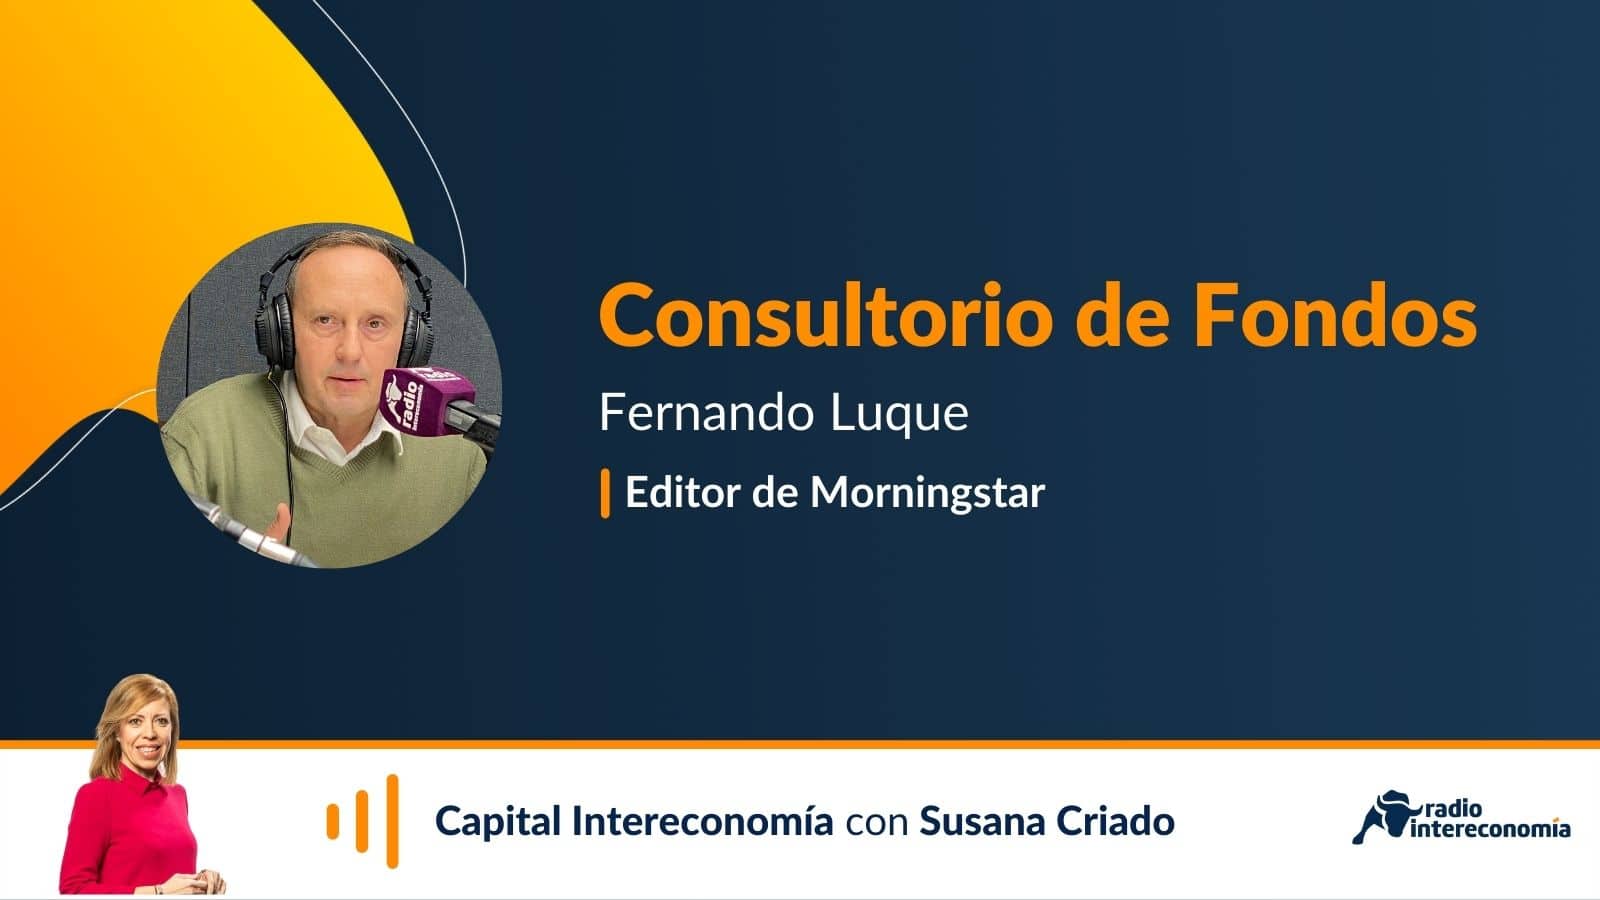 Consultorio de Fondos con Fernando Luque(Morningstar)